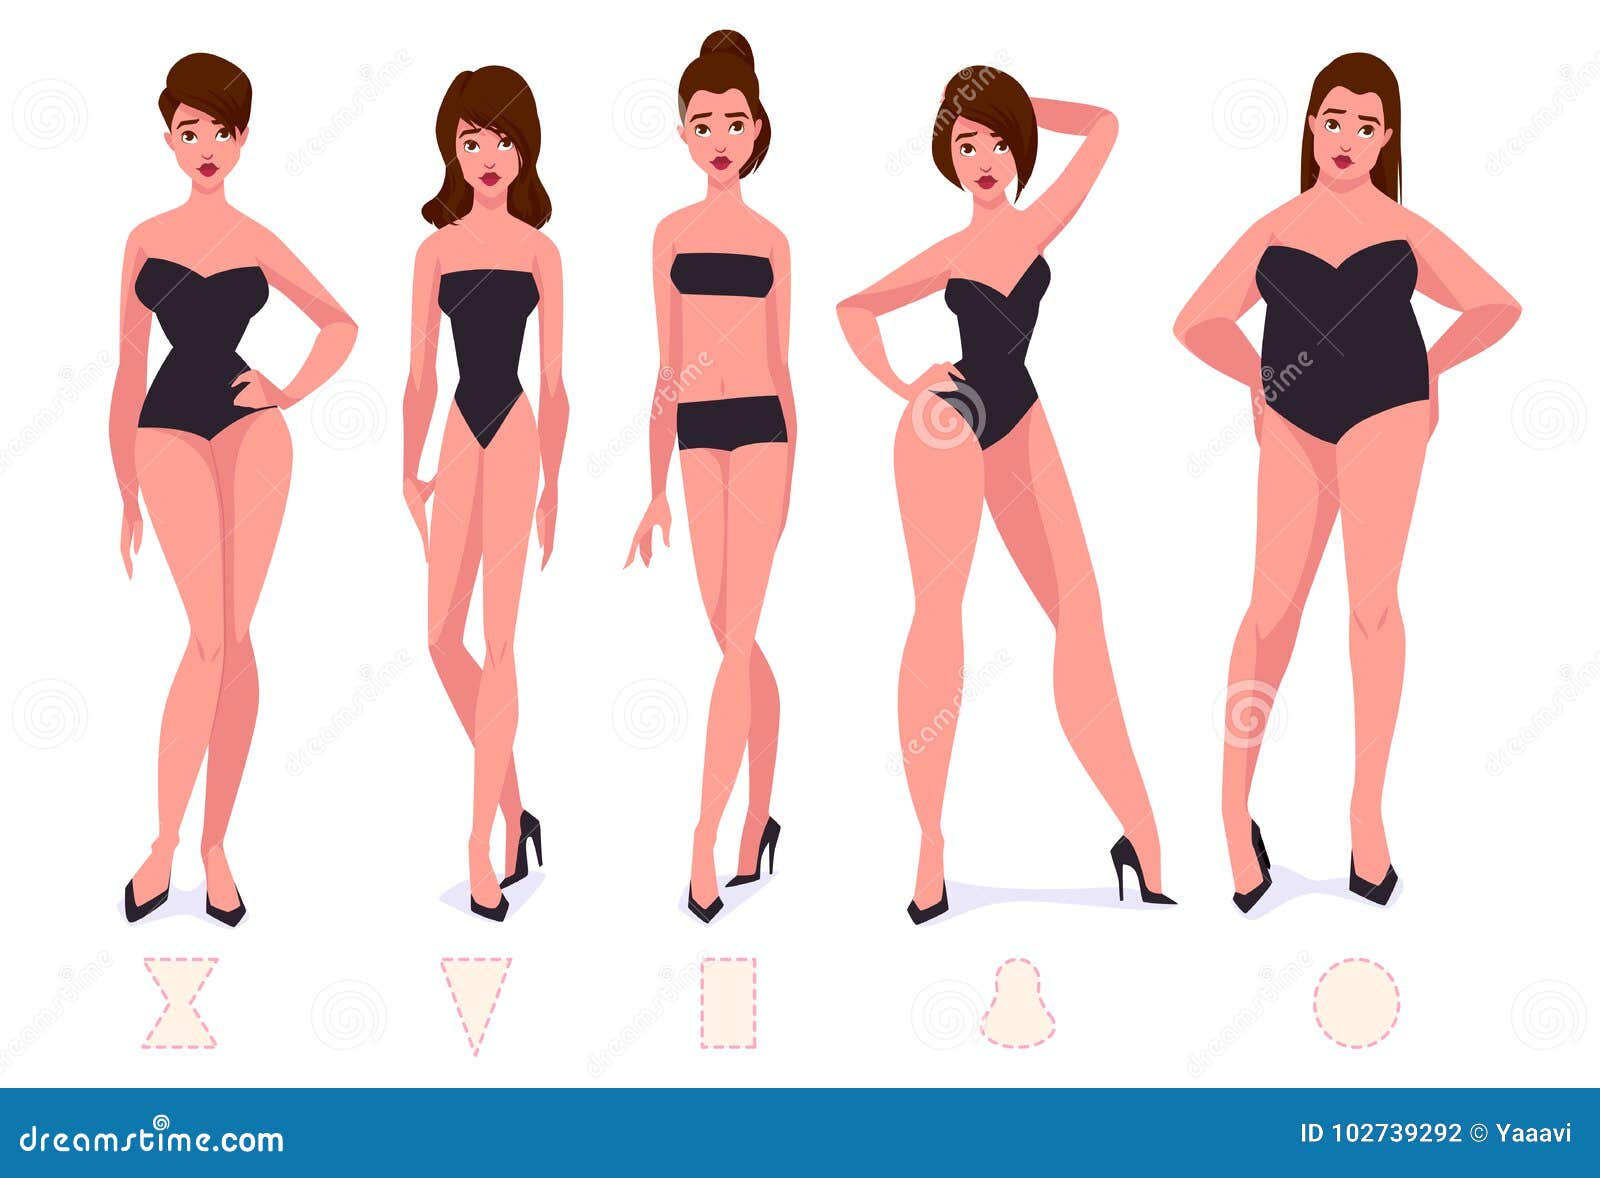 https://thumbs.dreamstime.com/z/set-female-body-shape-types-five-types-vector-cartoon-illustration-set-female-body-shape-types-five-types-102739292.jpg